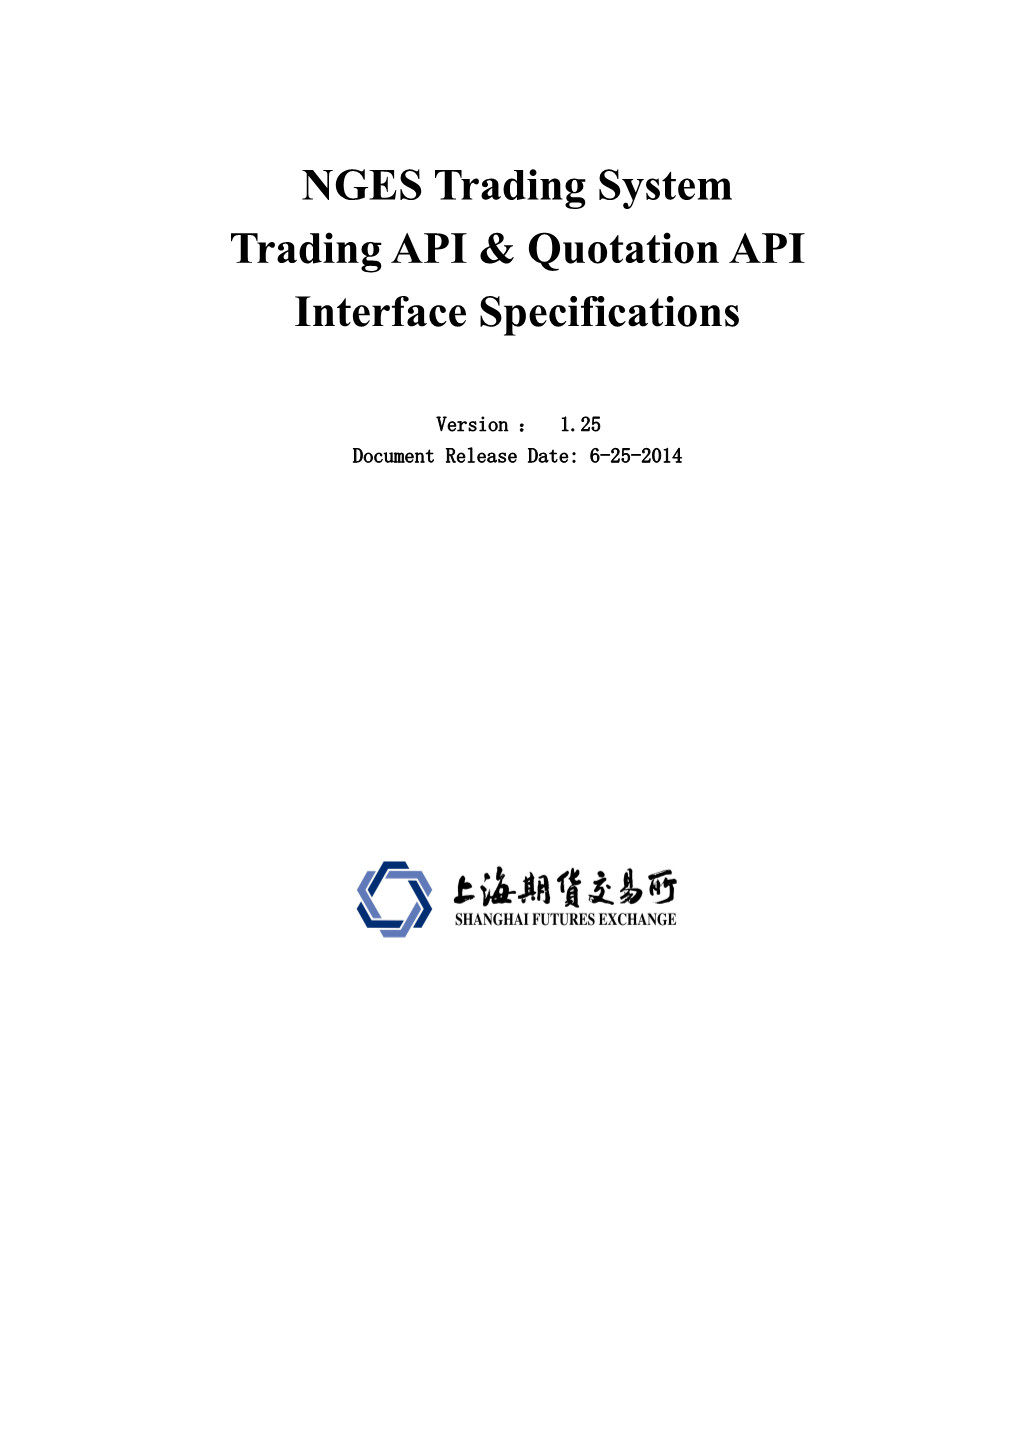 Trading API & Quotation API